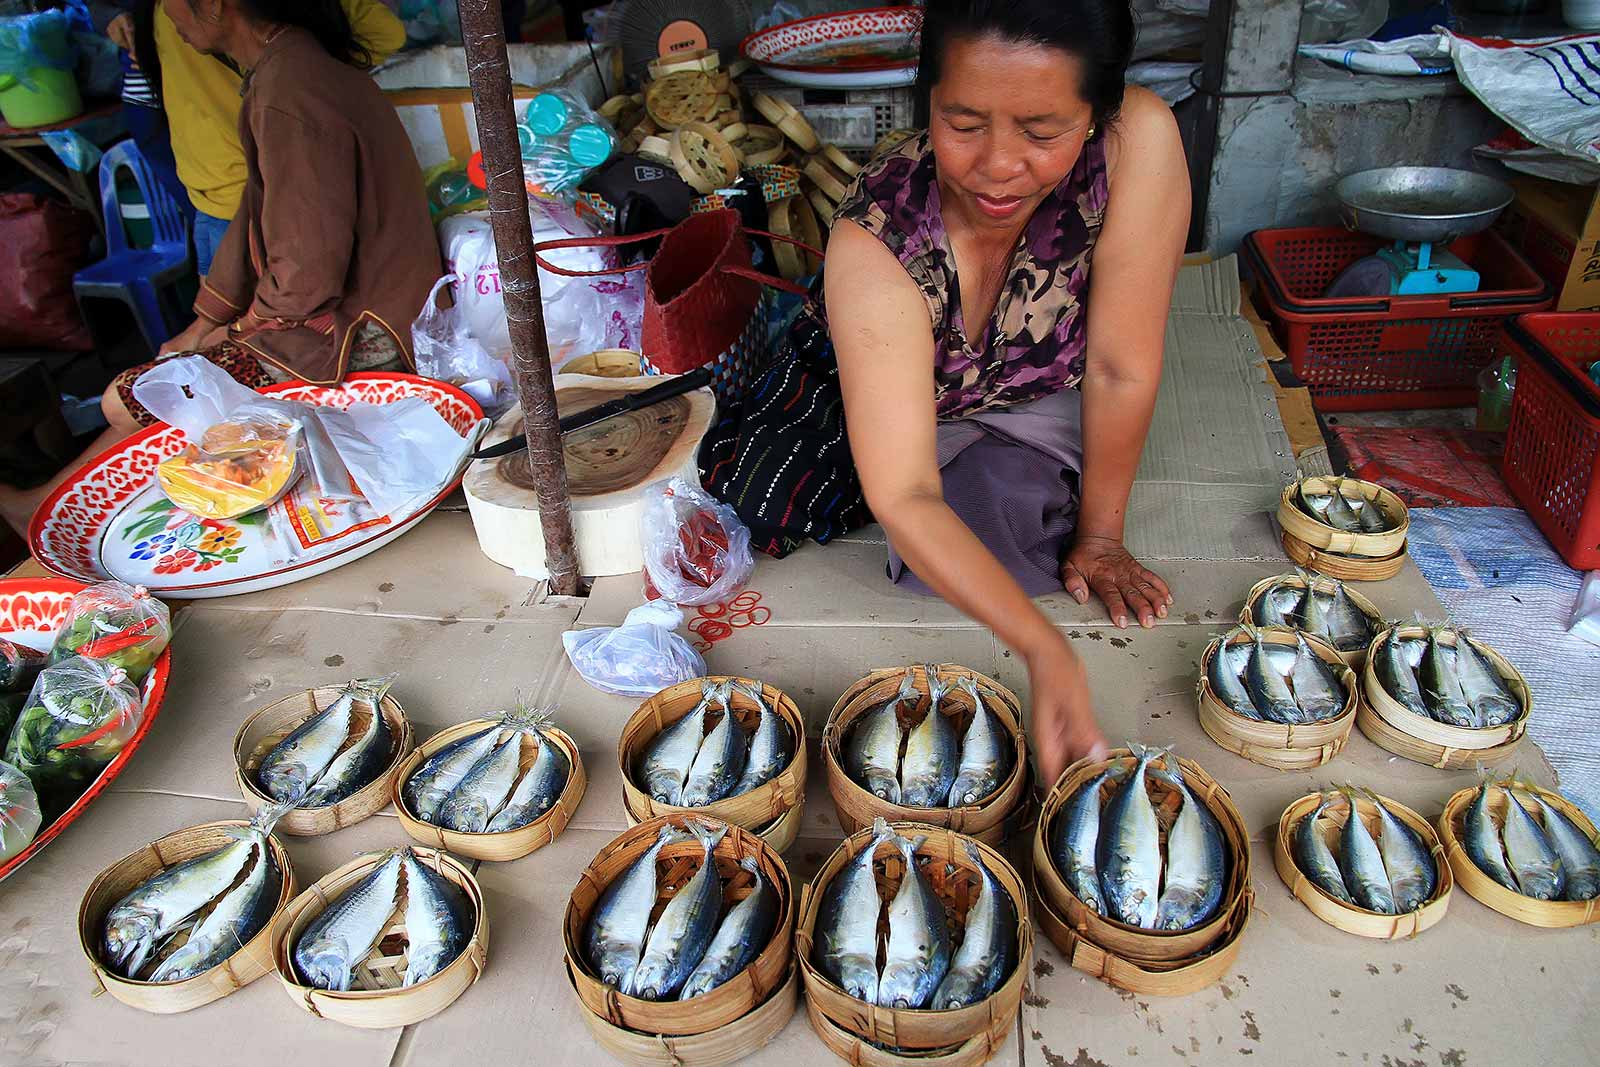 Market woman in Laos selling fish.